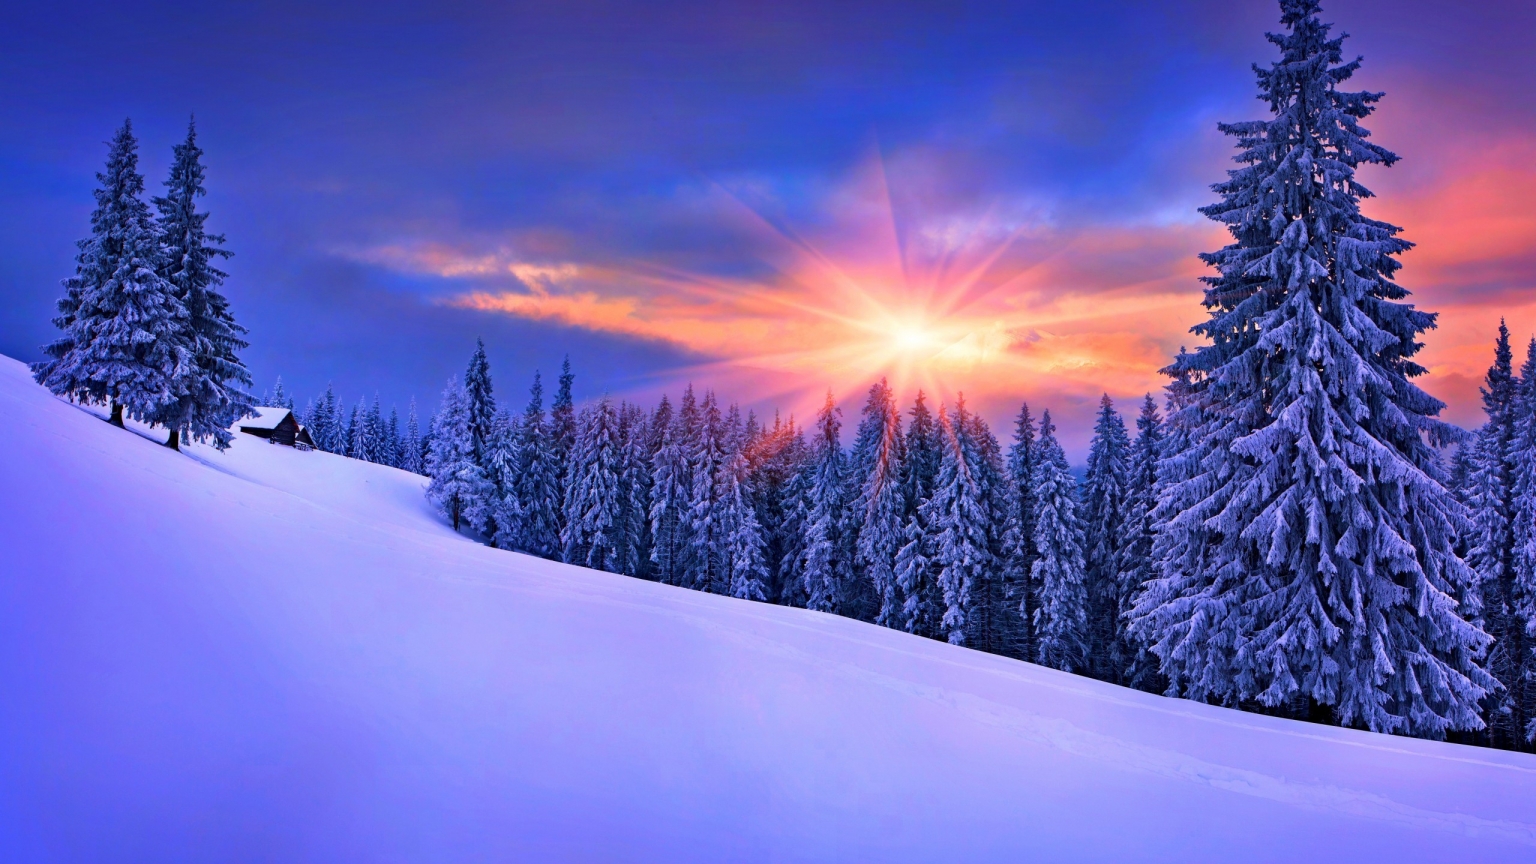 Late Winter Sunset for 1536 x 864 HDTV resolution